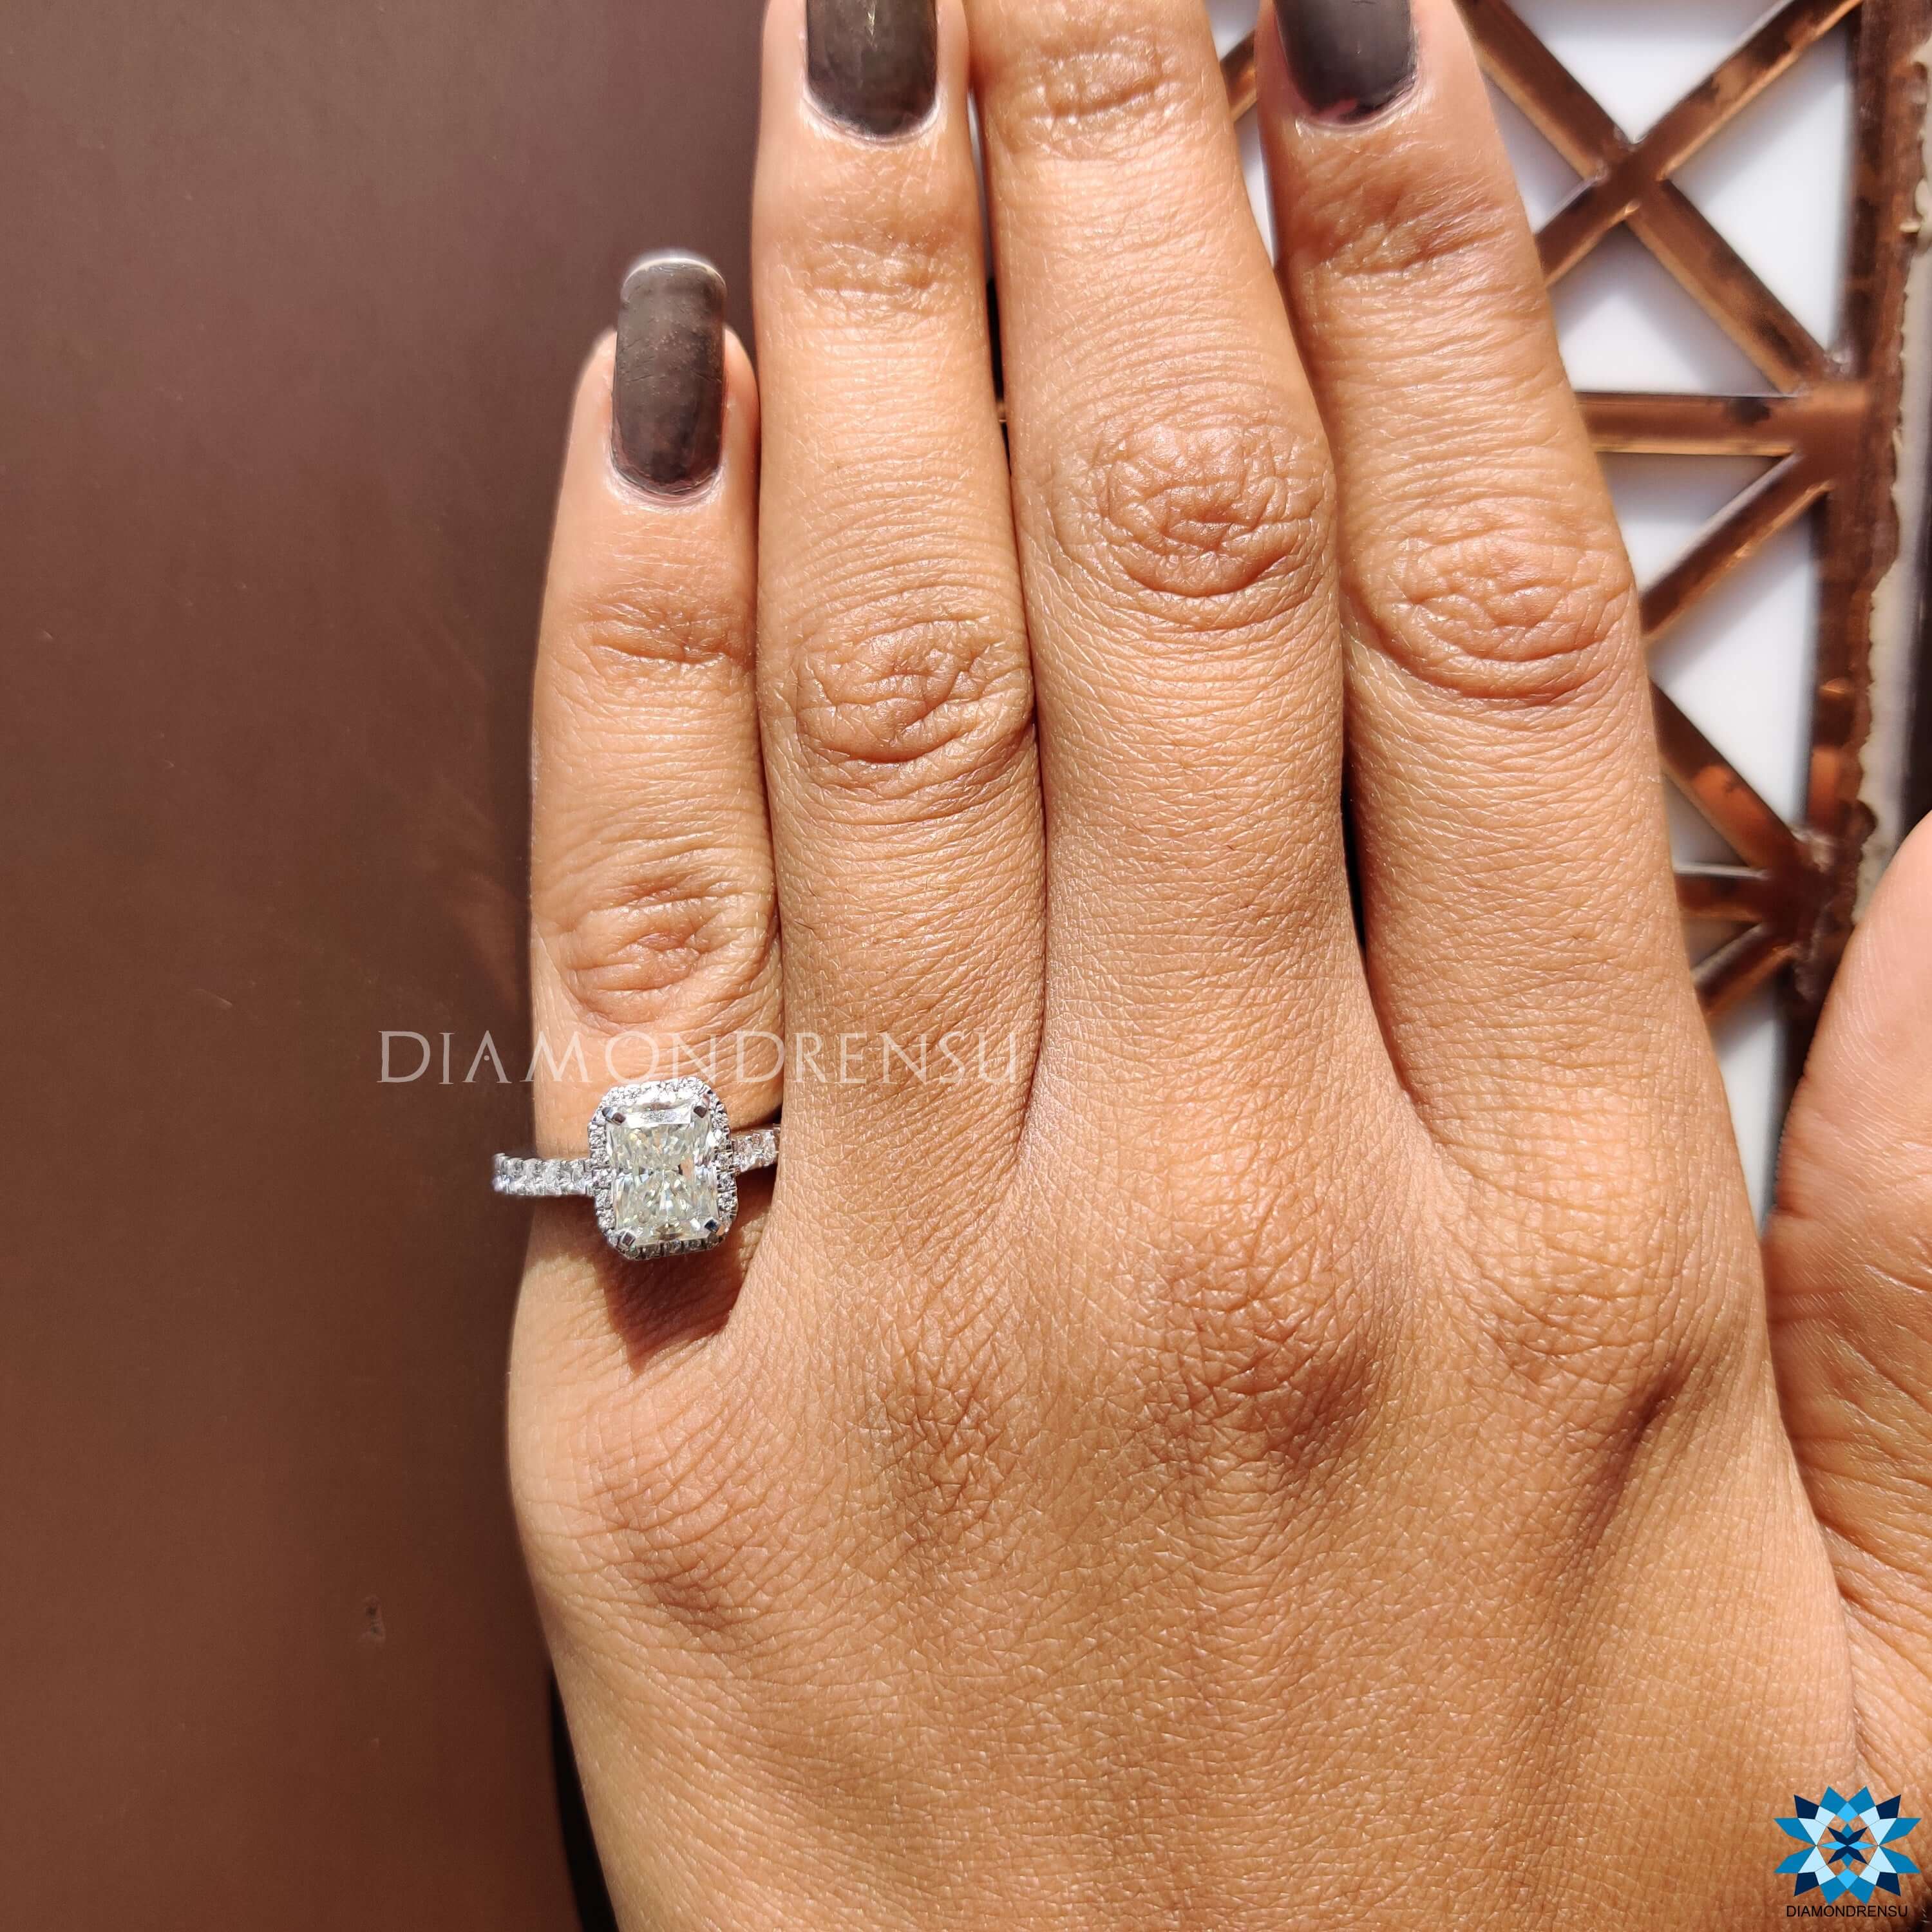 hidden halo engagement ring - diamondrensu